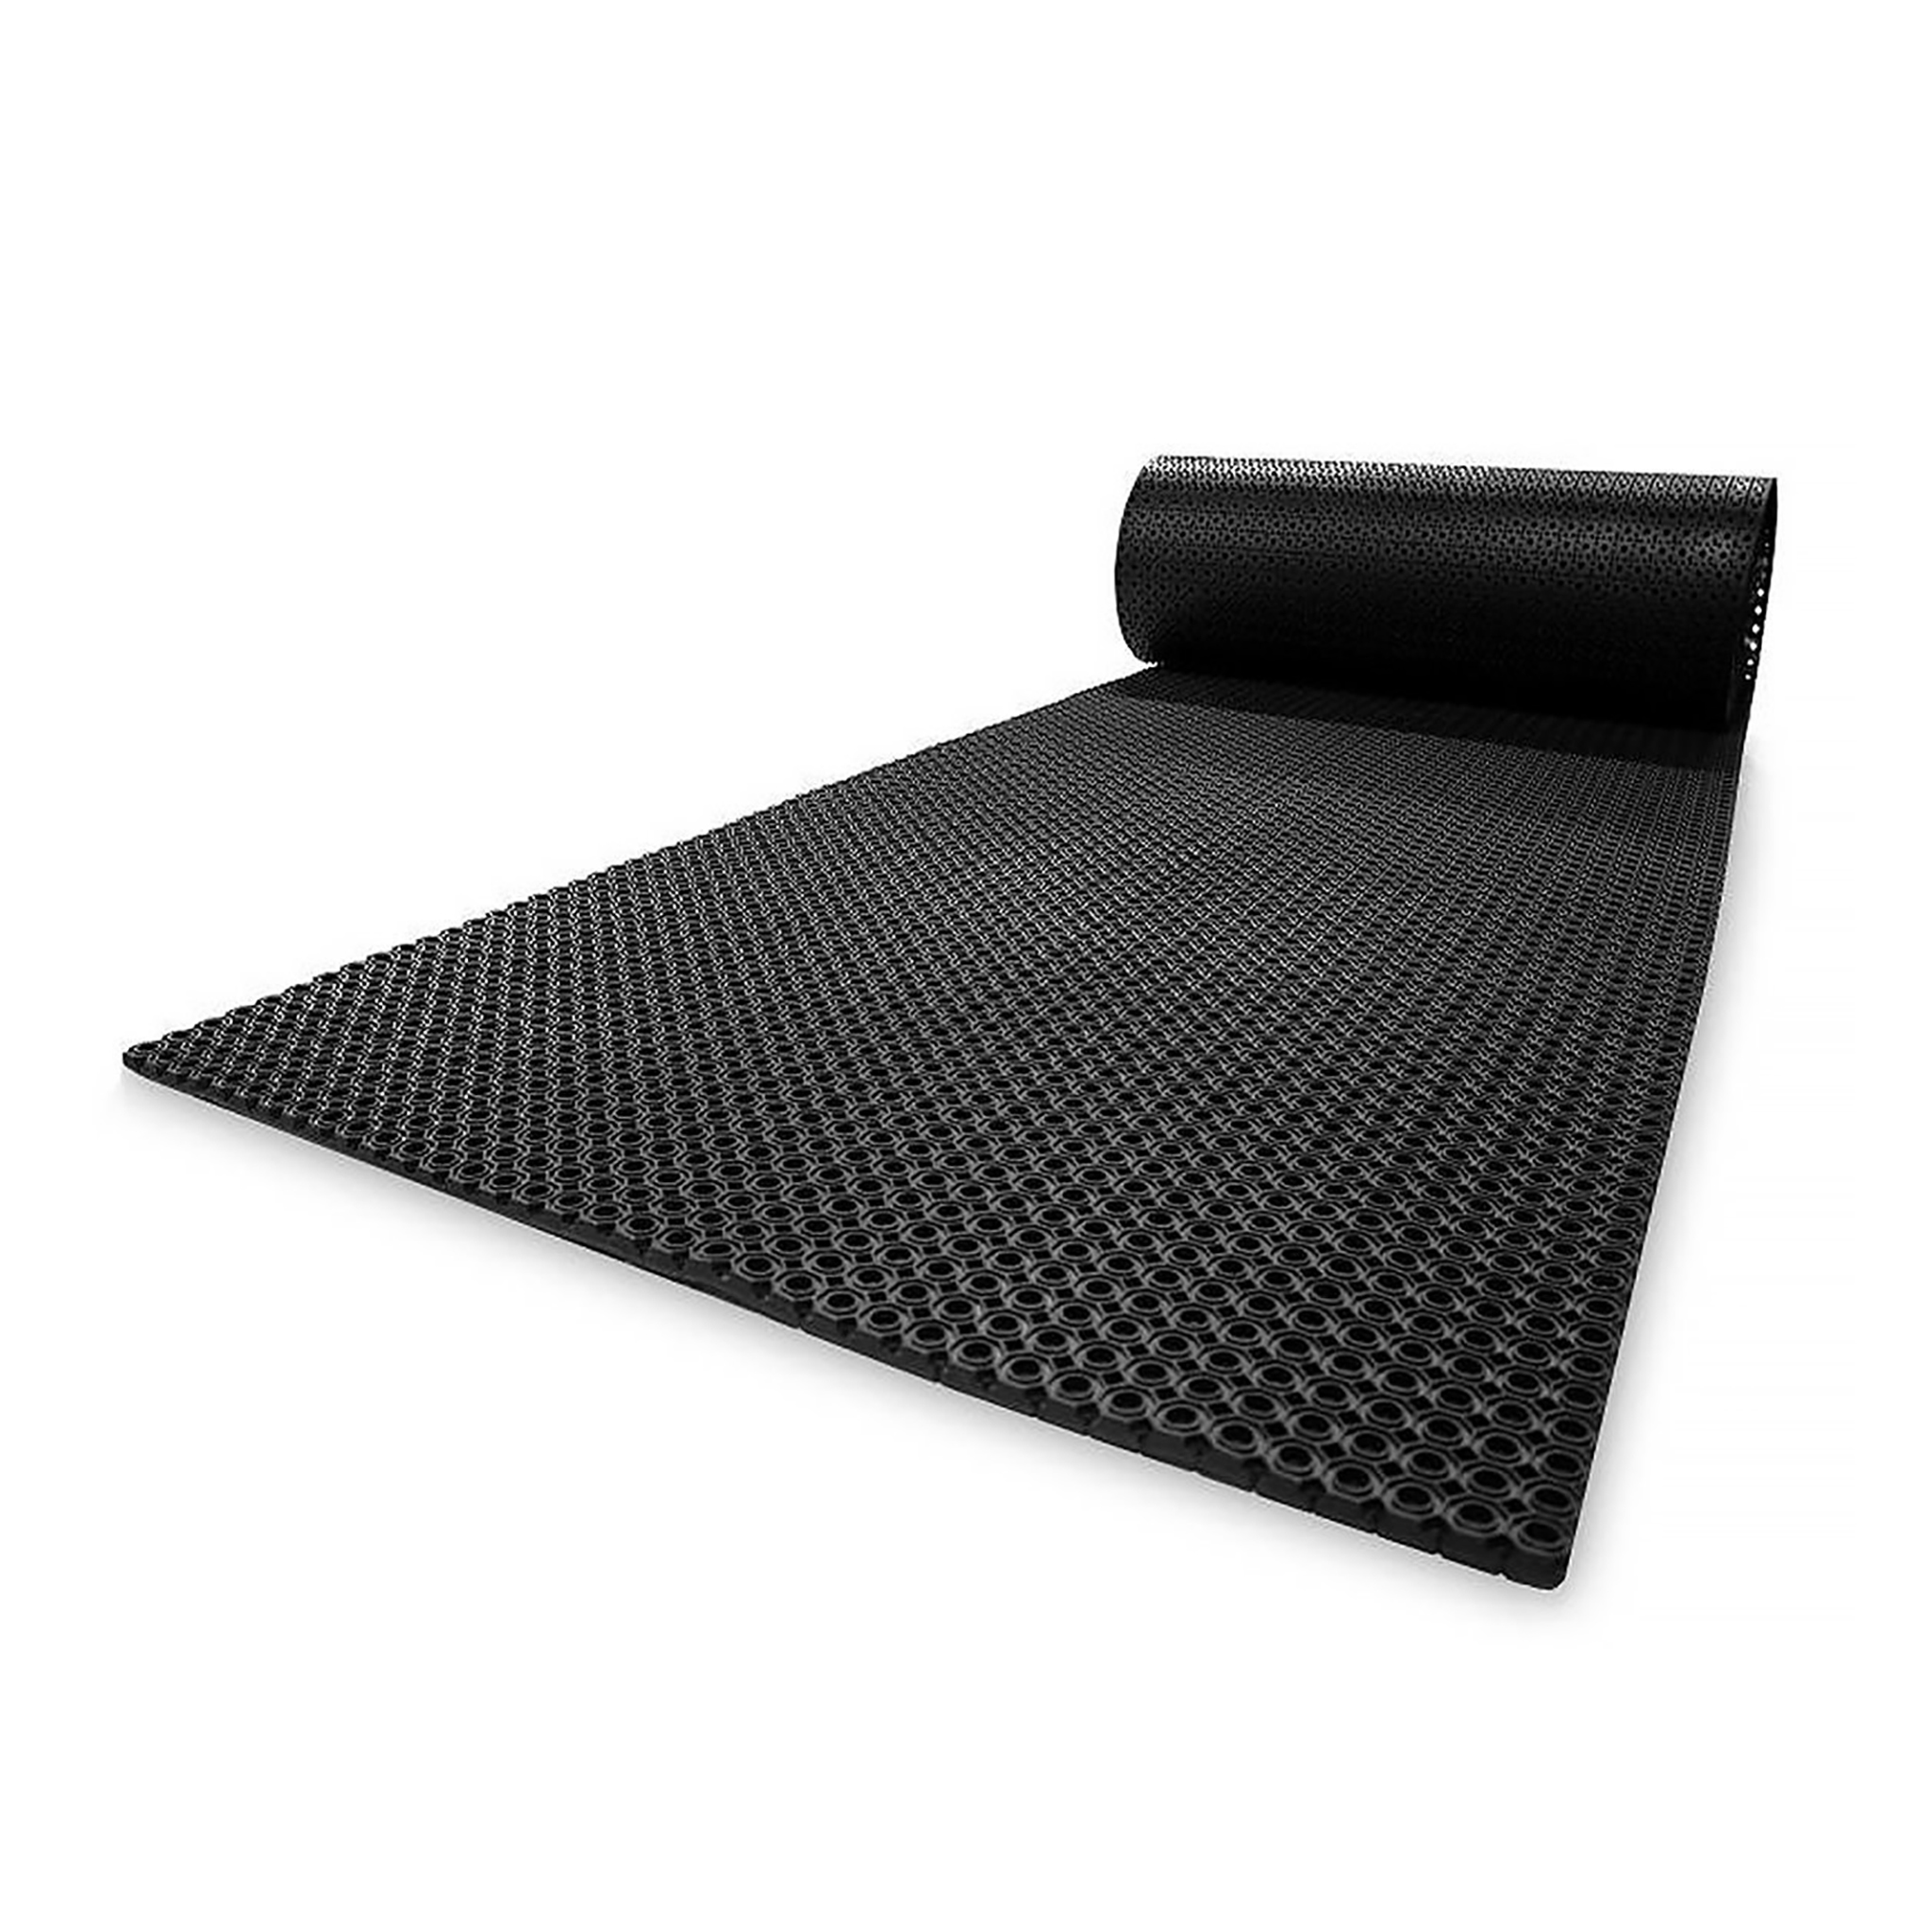 Ring rubber mat 100x100cm black